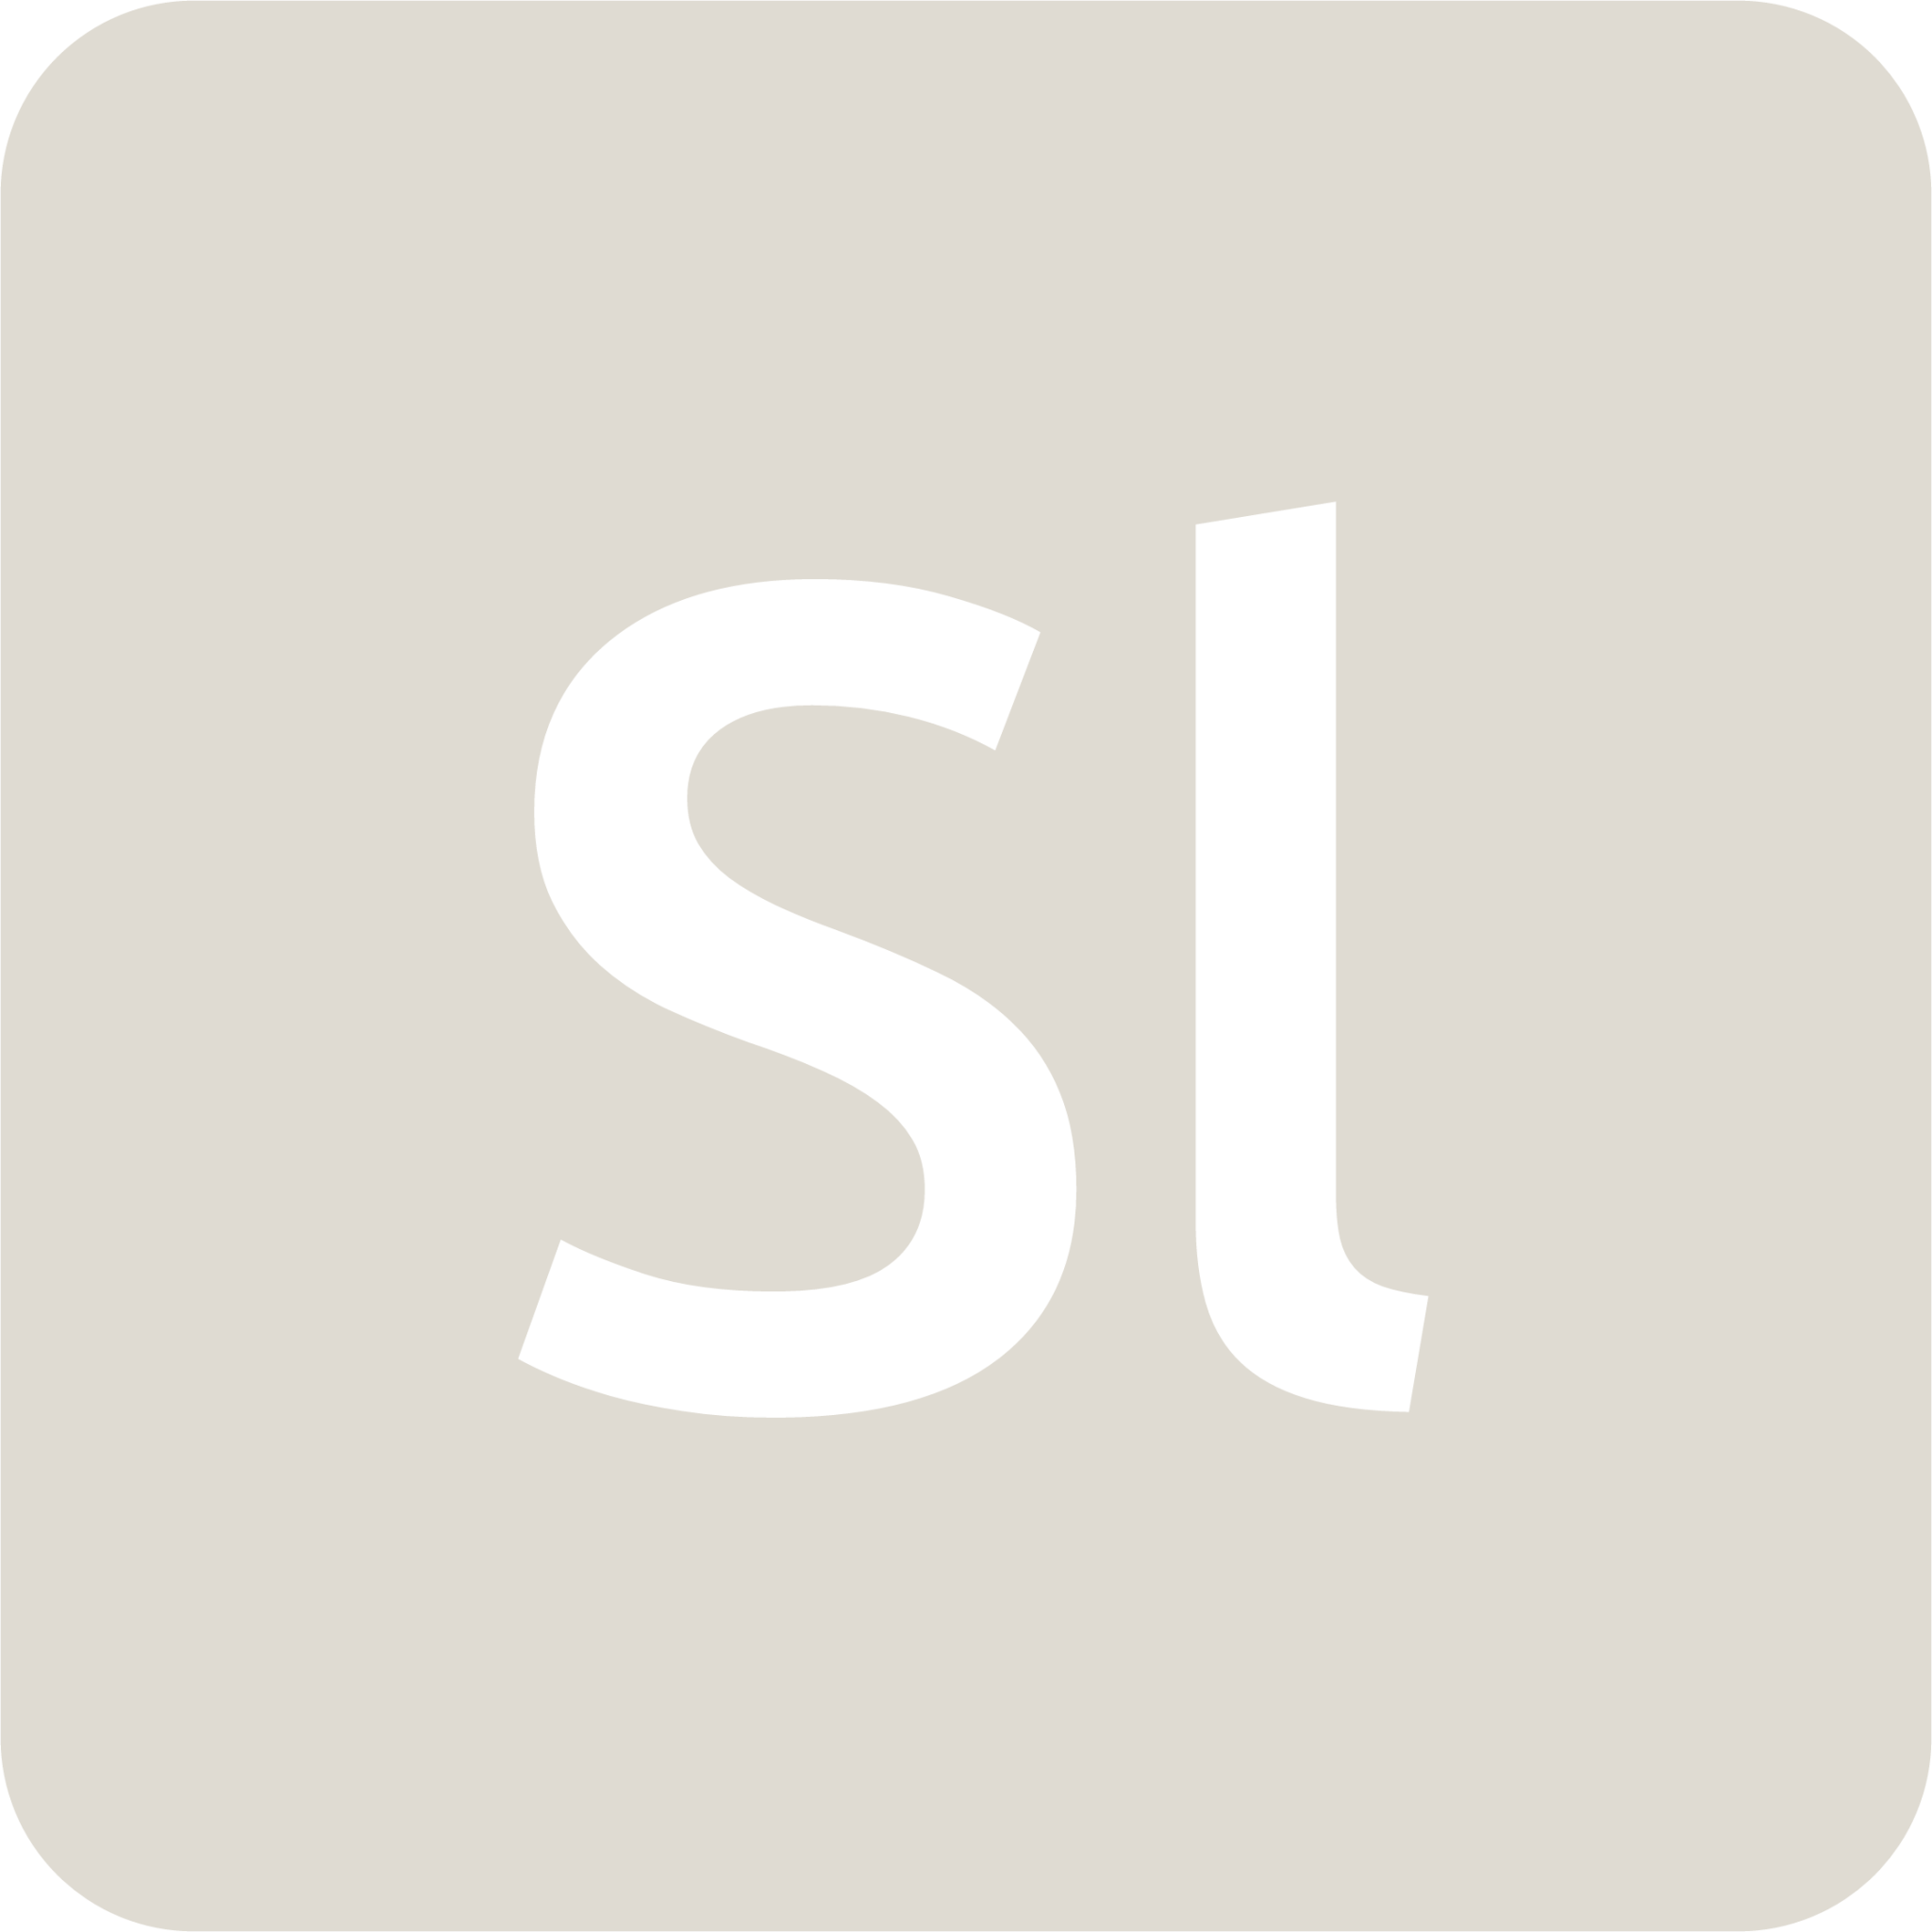 indicator keyboard Sl icon